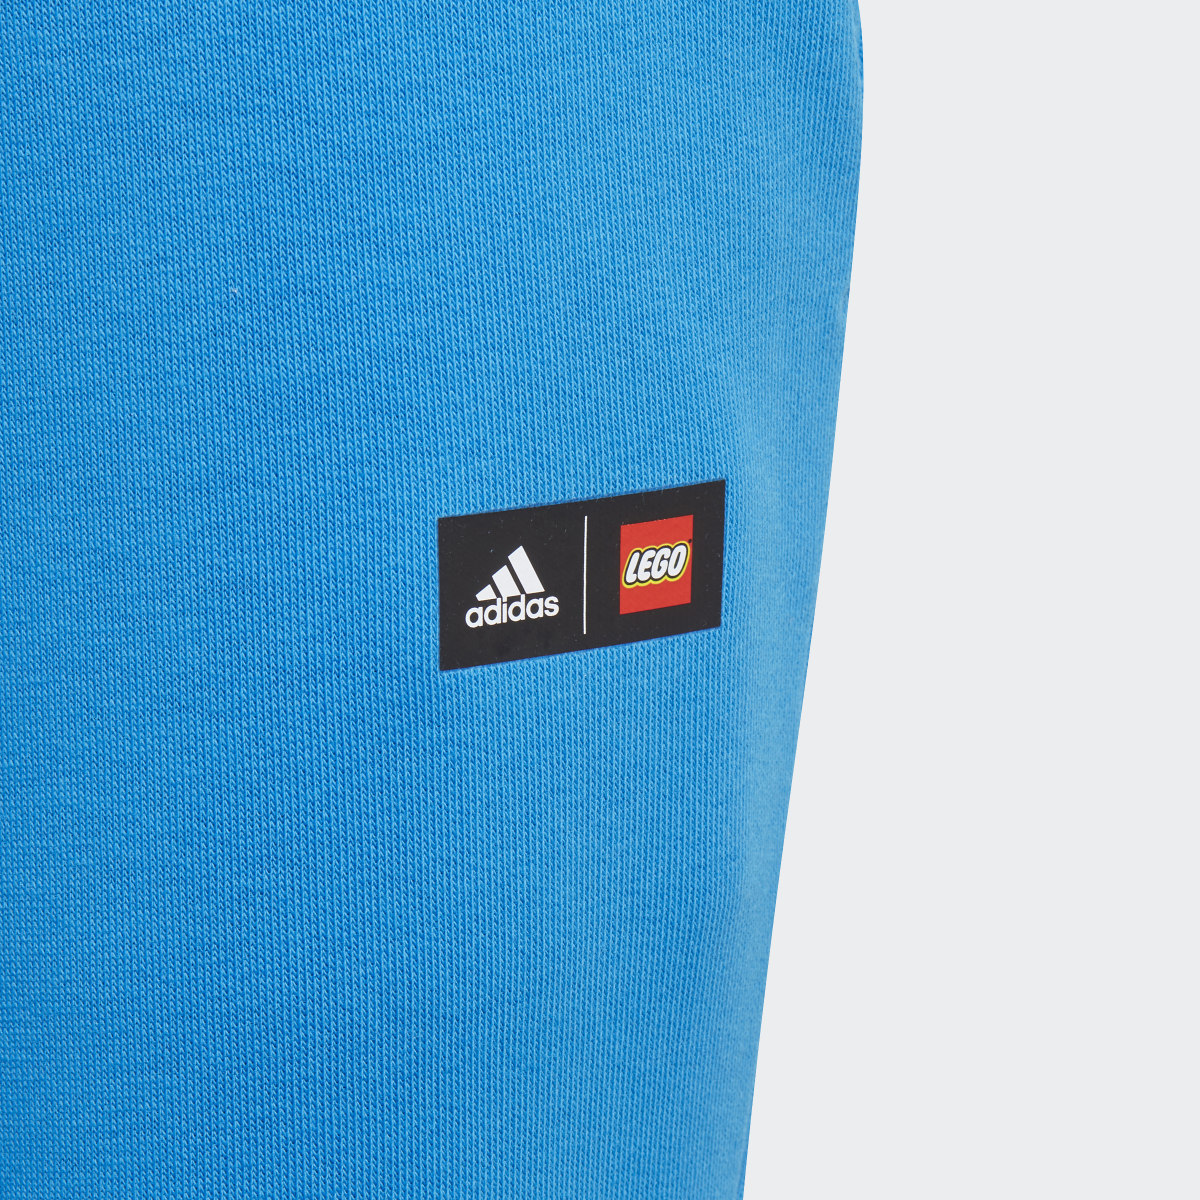 Adidas x Classic LEGO® Sweatshirt und Hose Set. 7